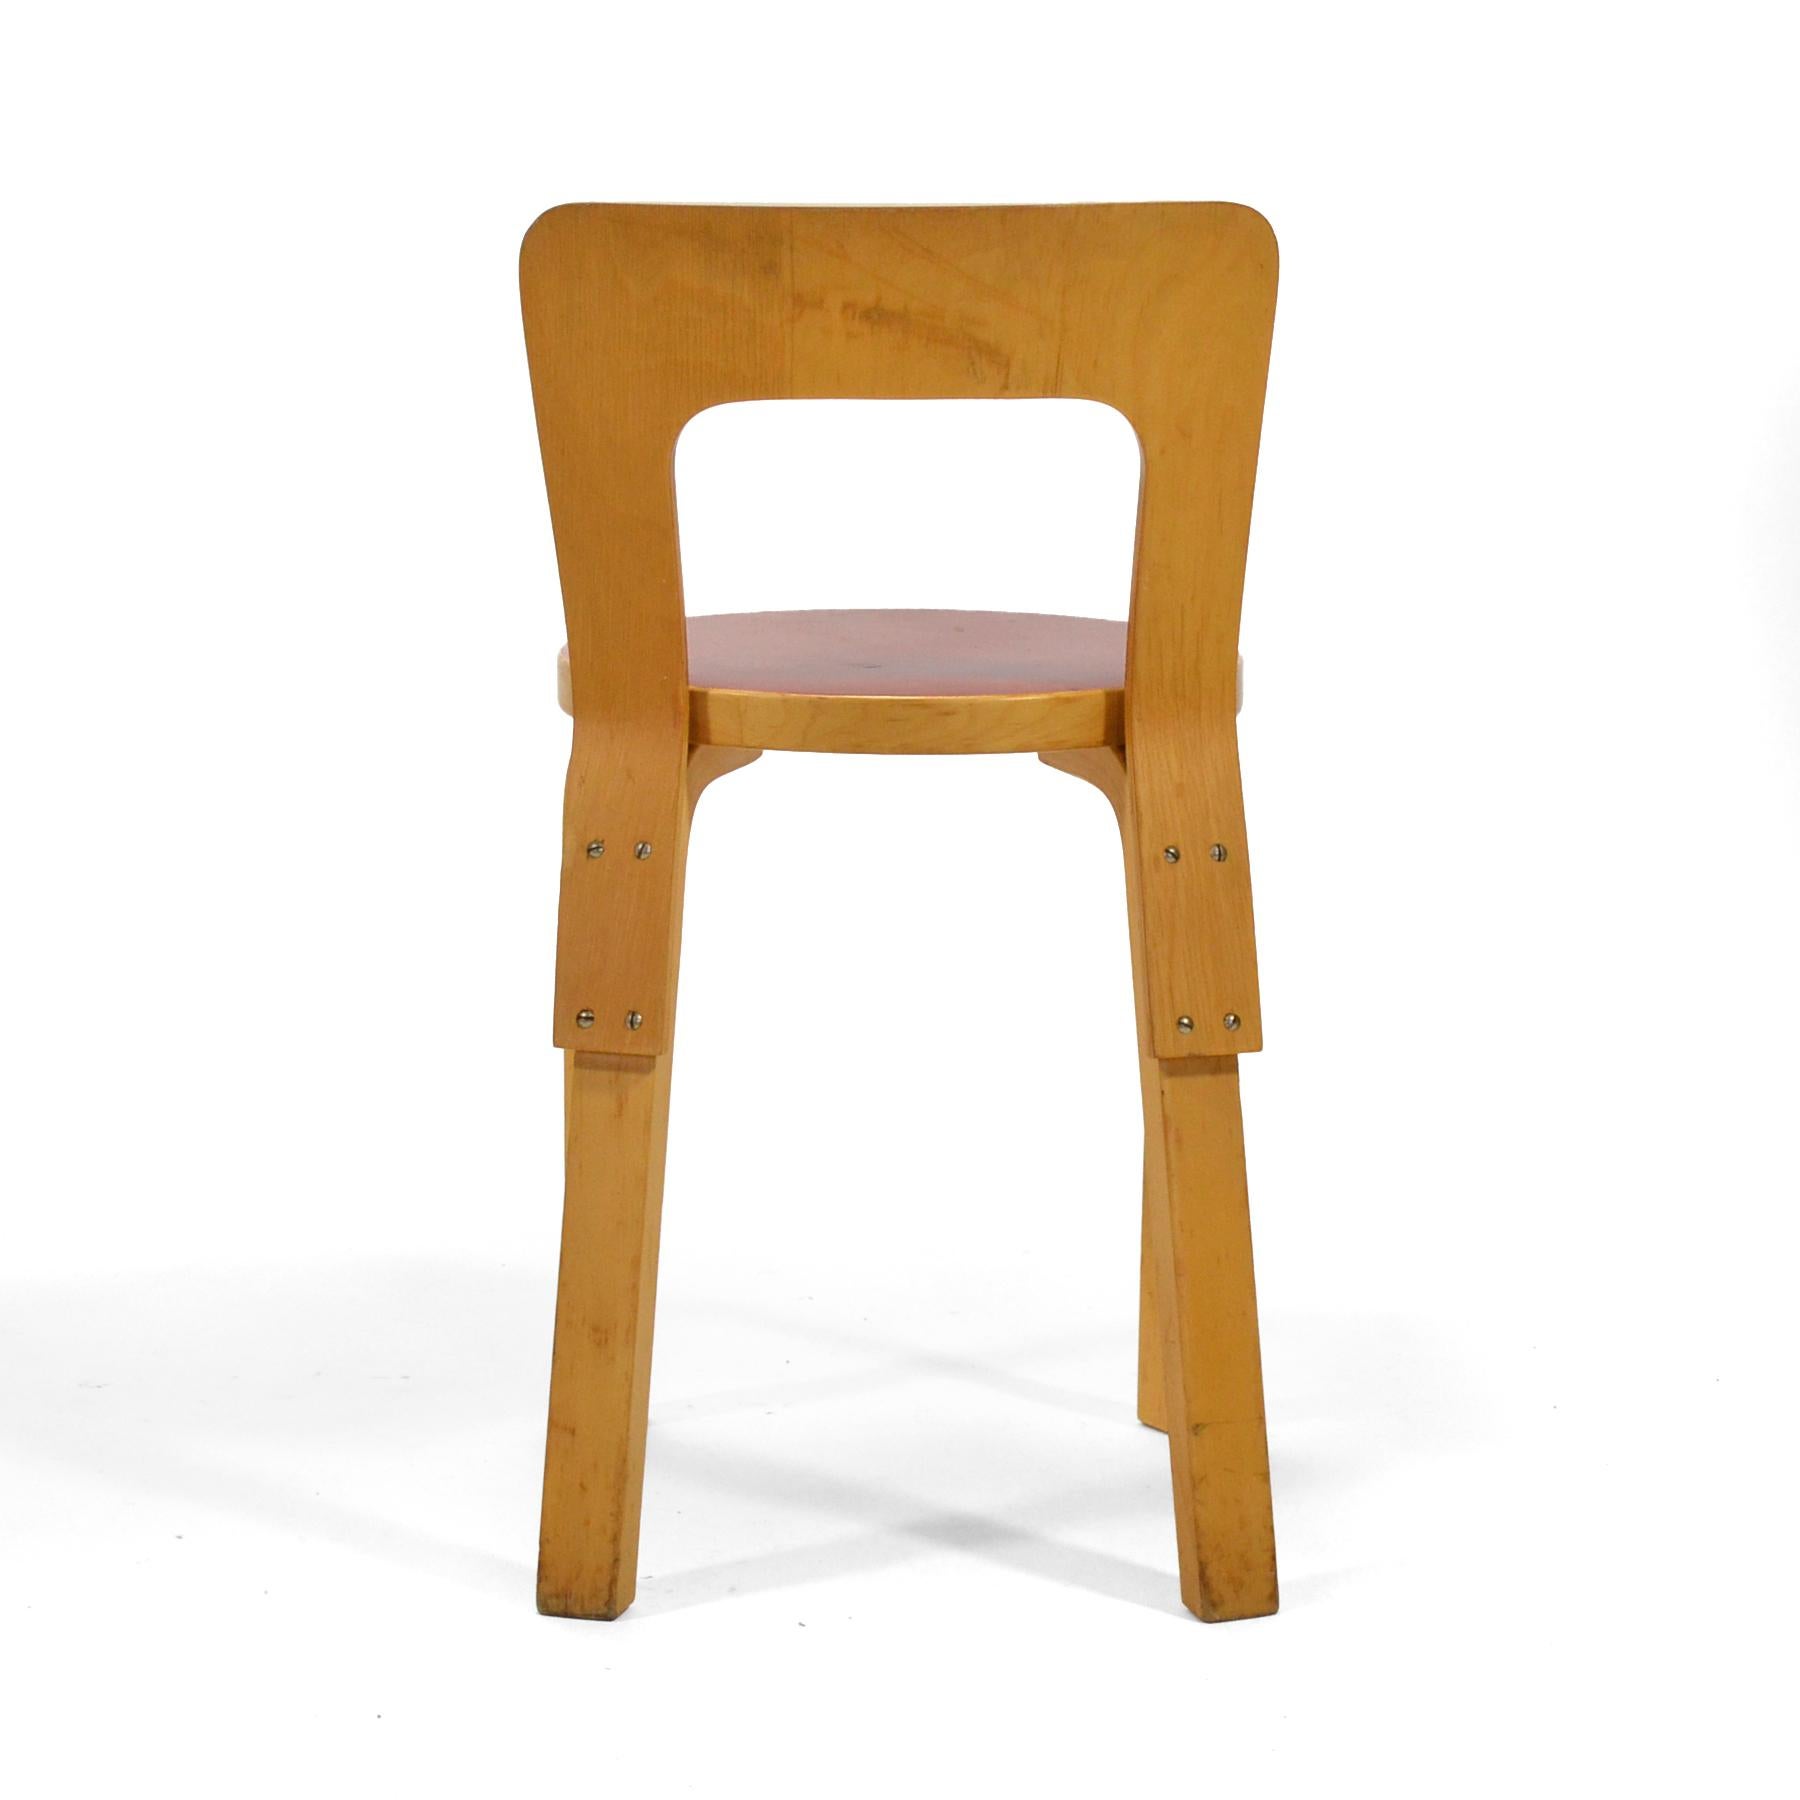 Finnish Alvar Aalto Model 65 Chair with Red Seat by Artek